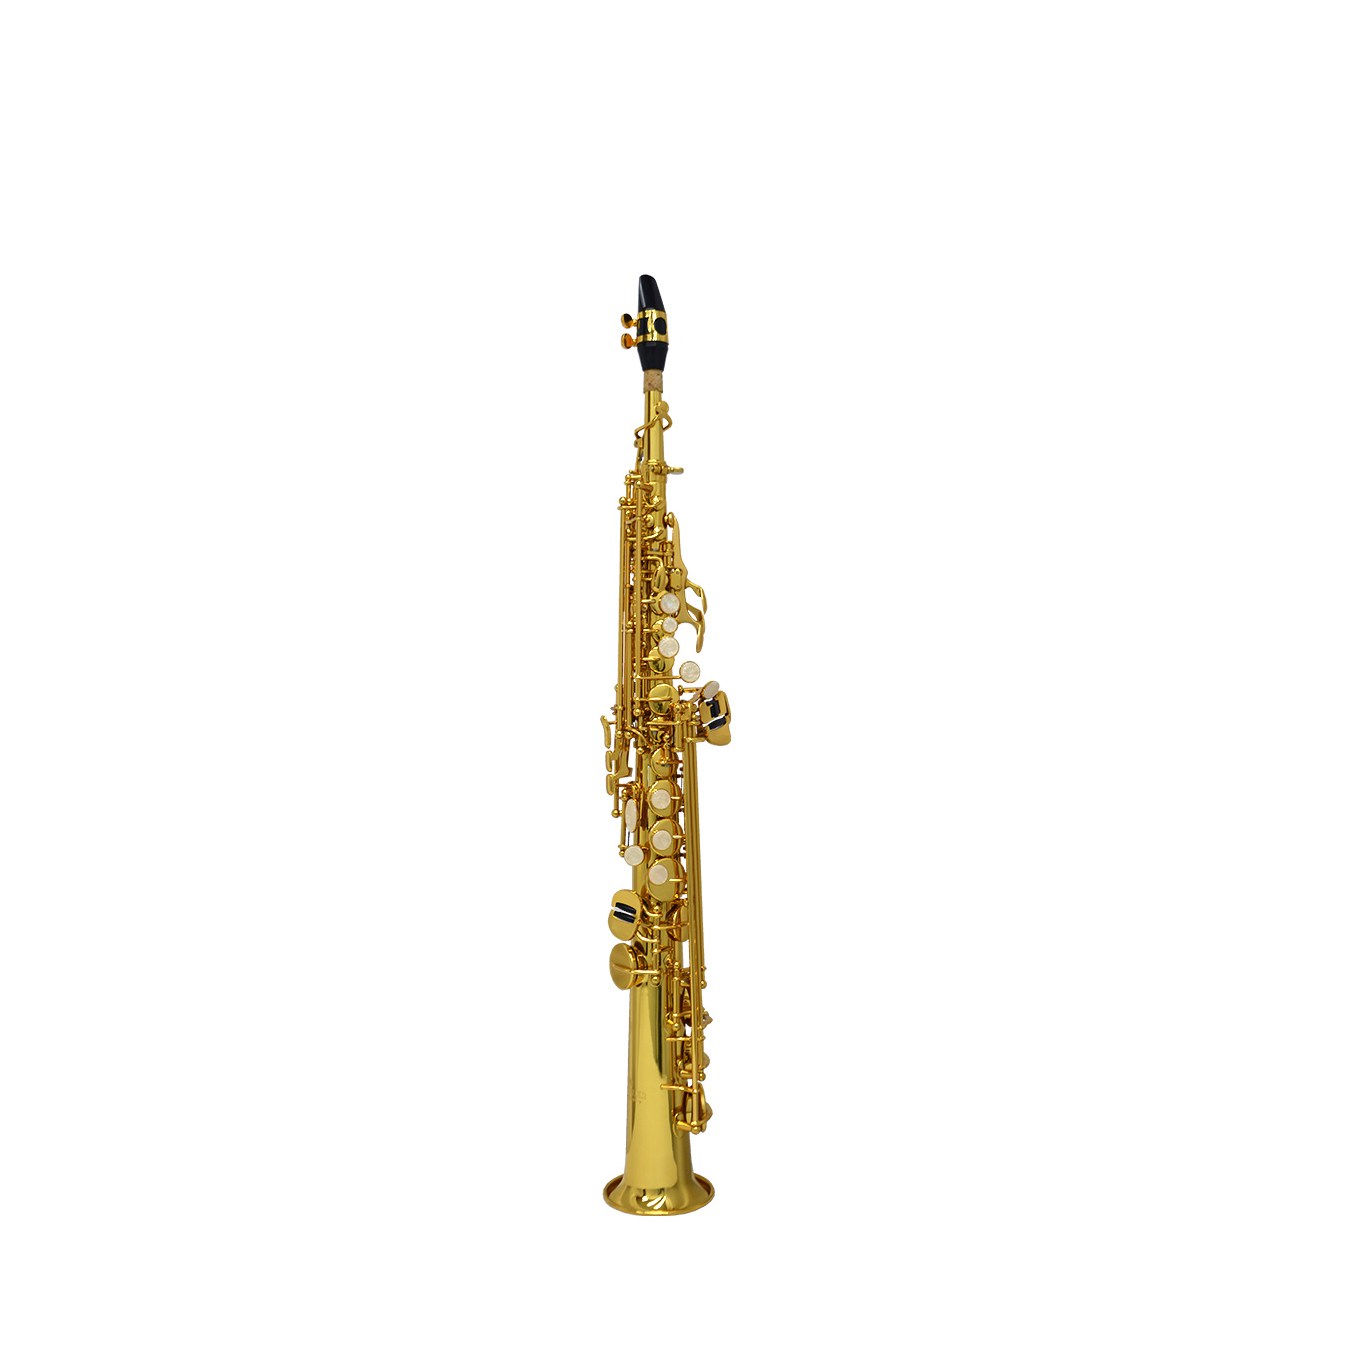 American Heritage 400 Soprano Saxophone - Gold Lacquer